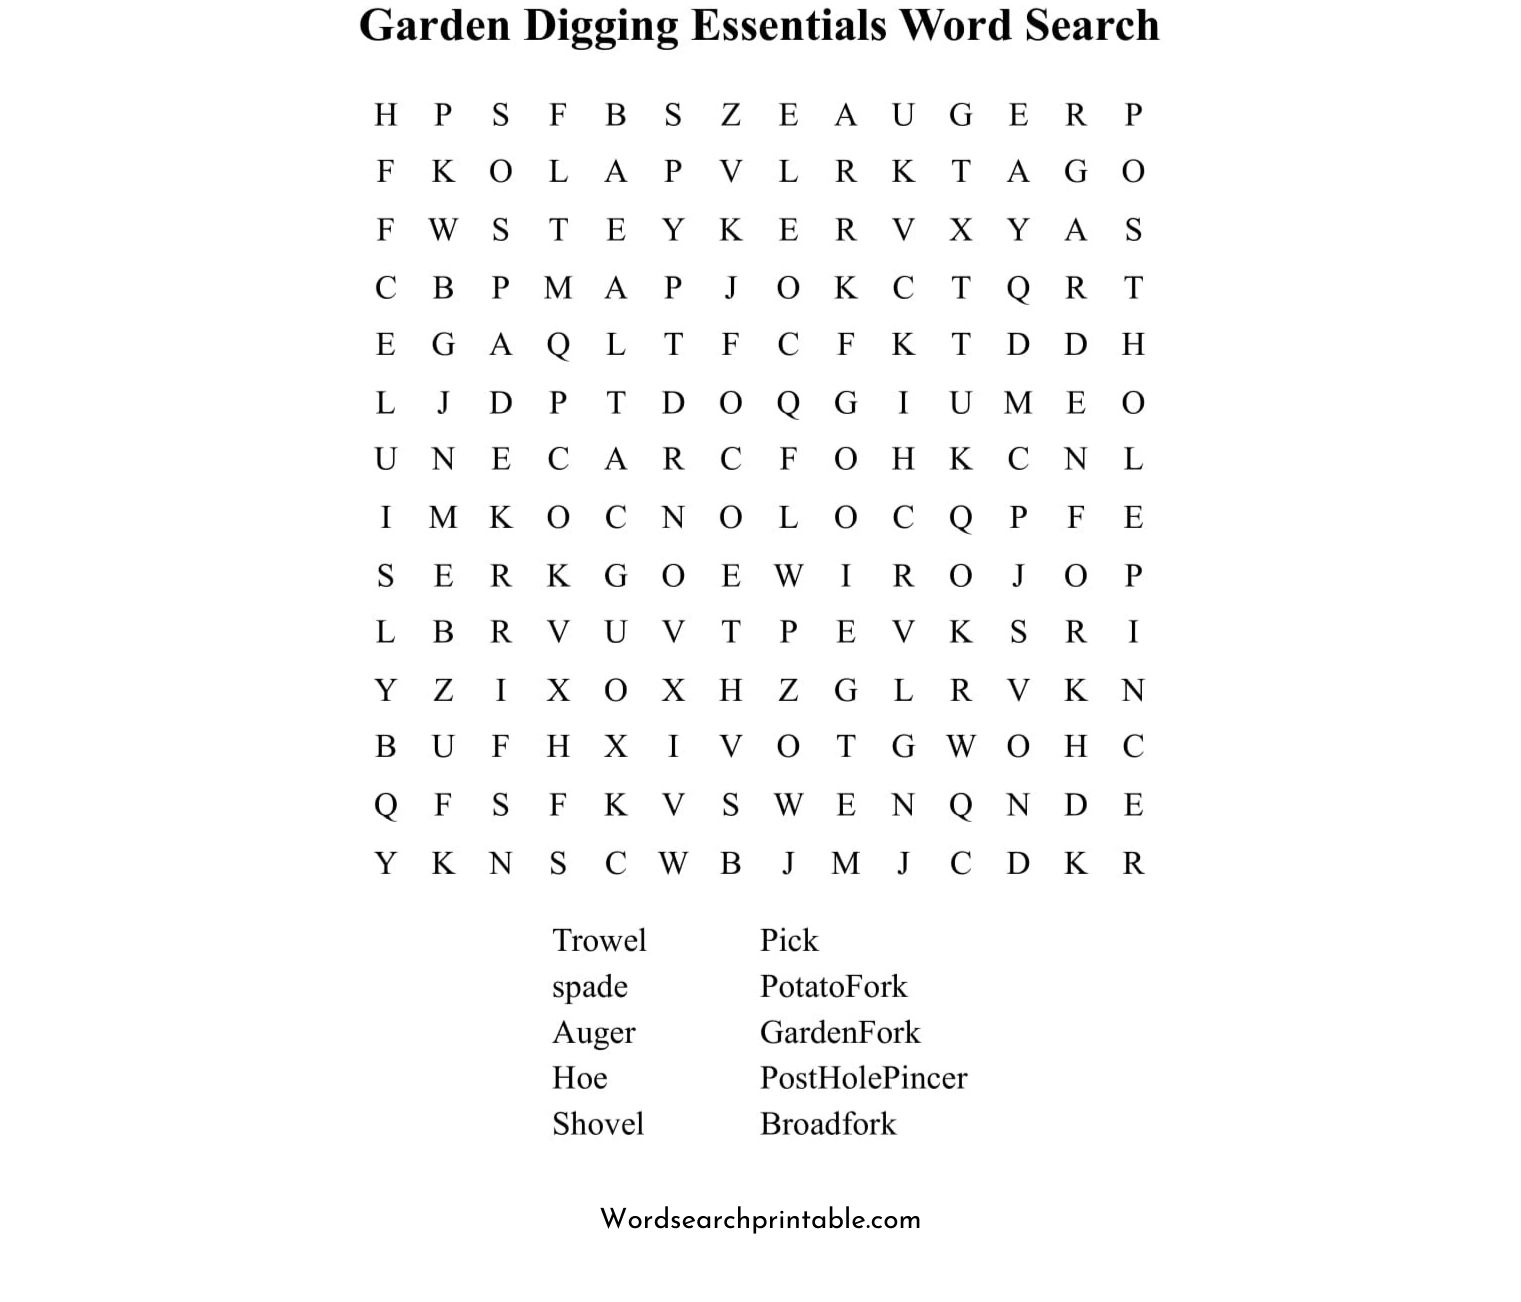 garden digging essentials word search puzzle